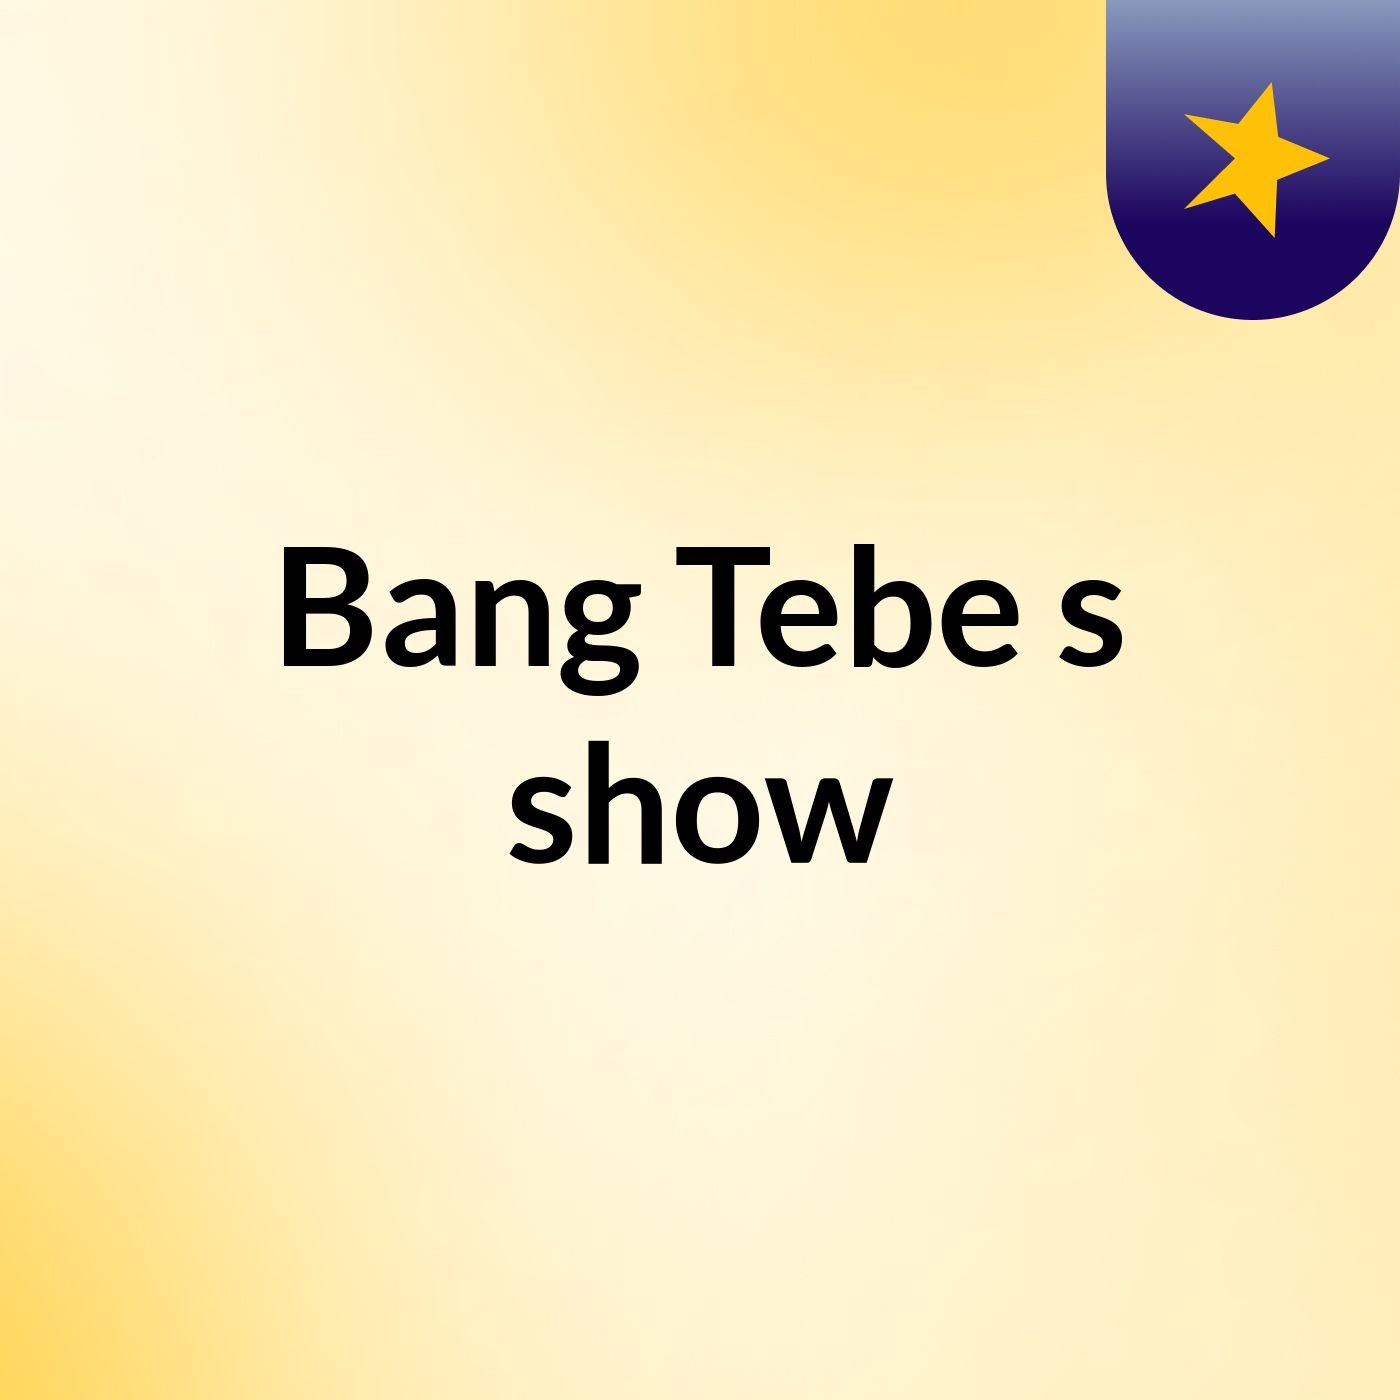 Bang Tebe's show